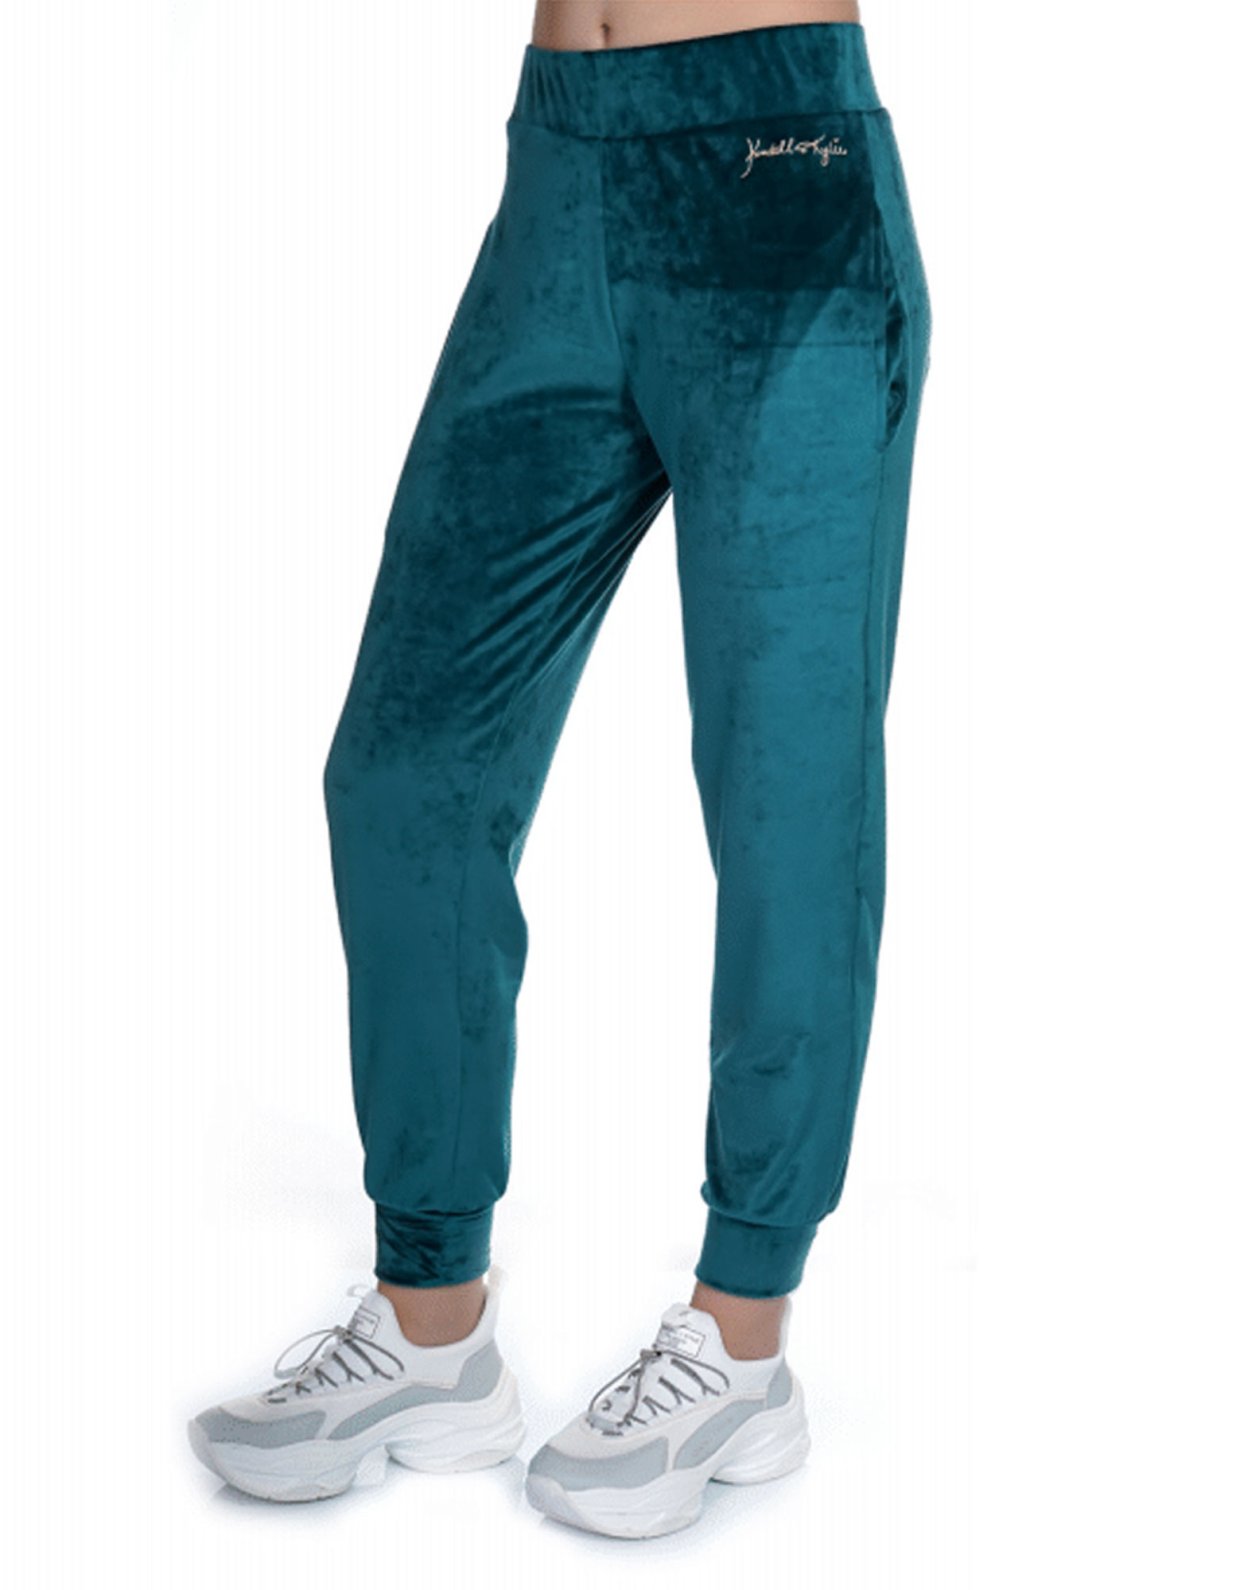 Kendall + Kylie Velour high rise jogger pants emerald